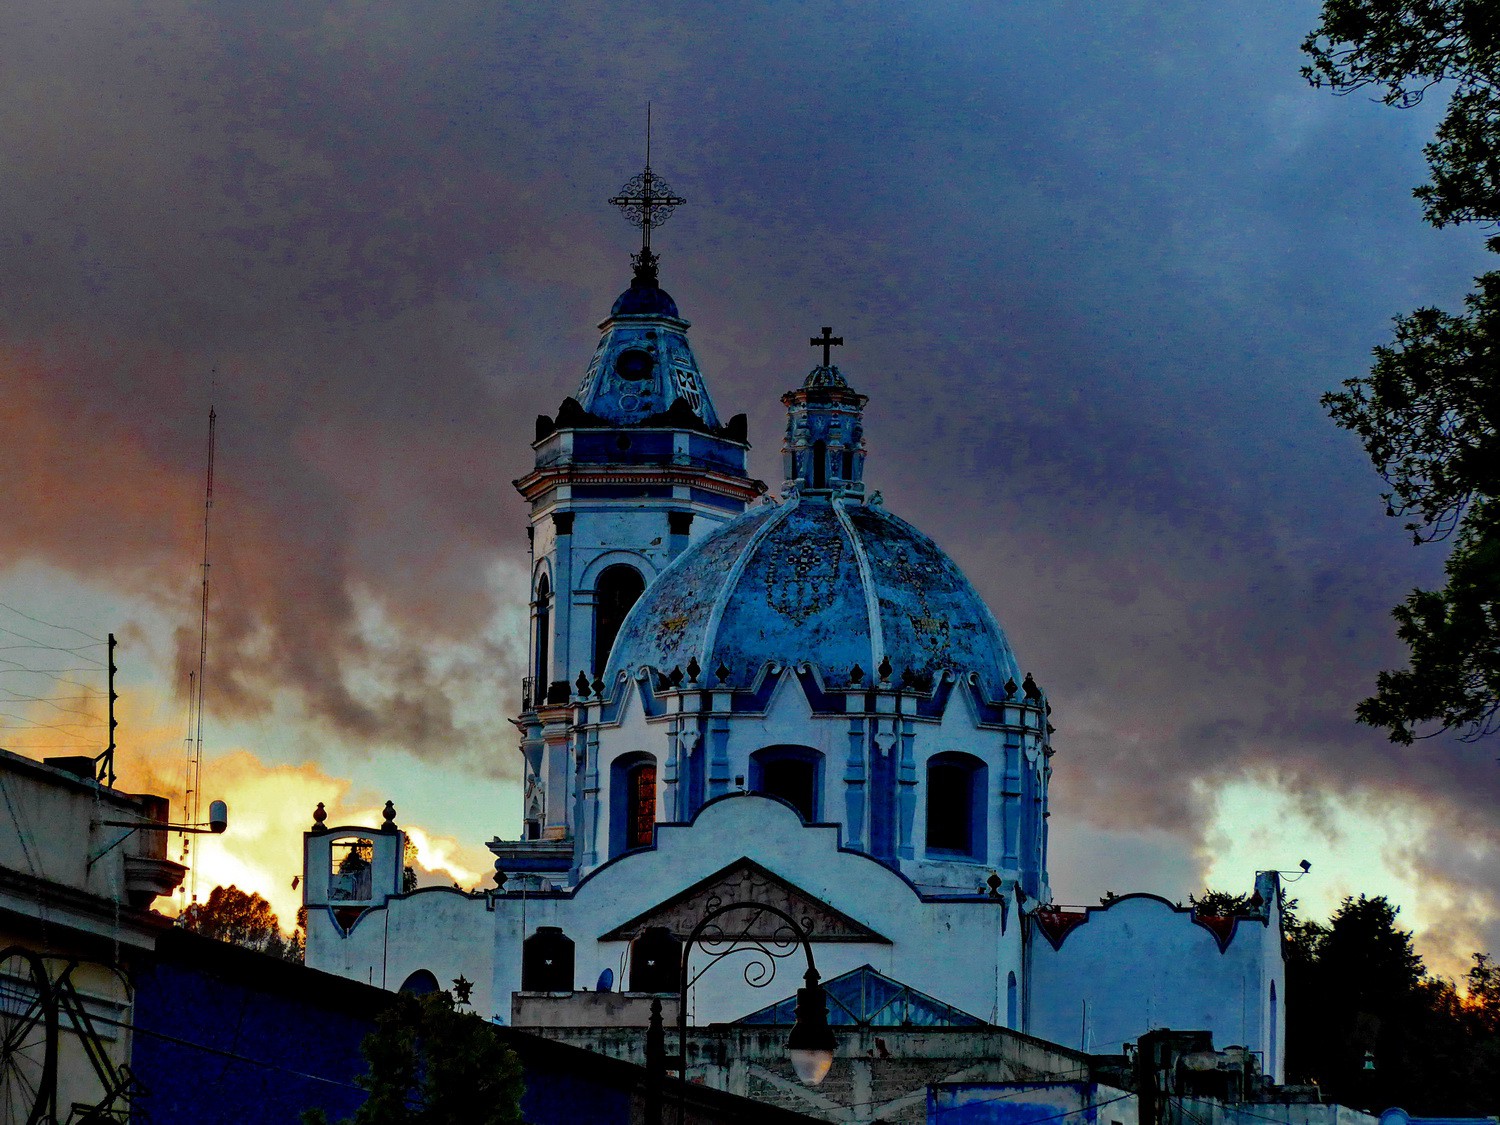 Church in Toluca at sunset